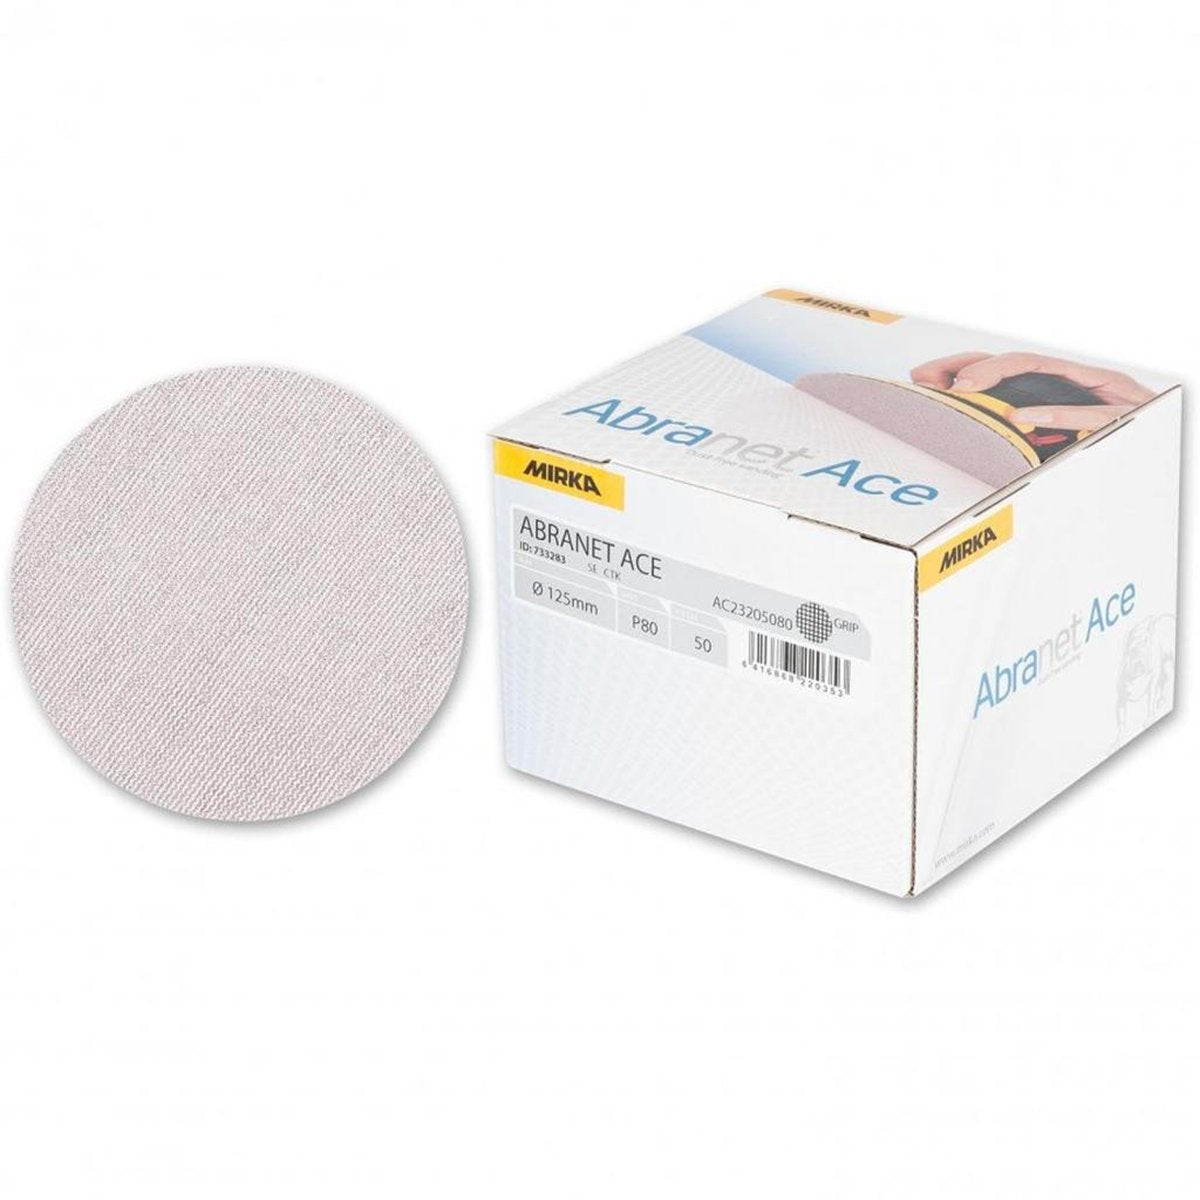 Mirka Abranet Ace Ceramic Discs - 150mm/6 - 50/Pack